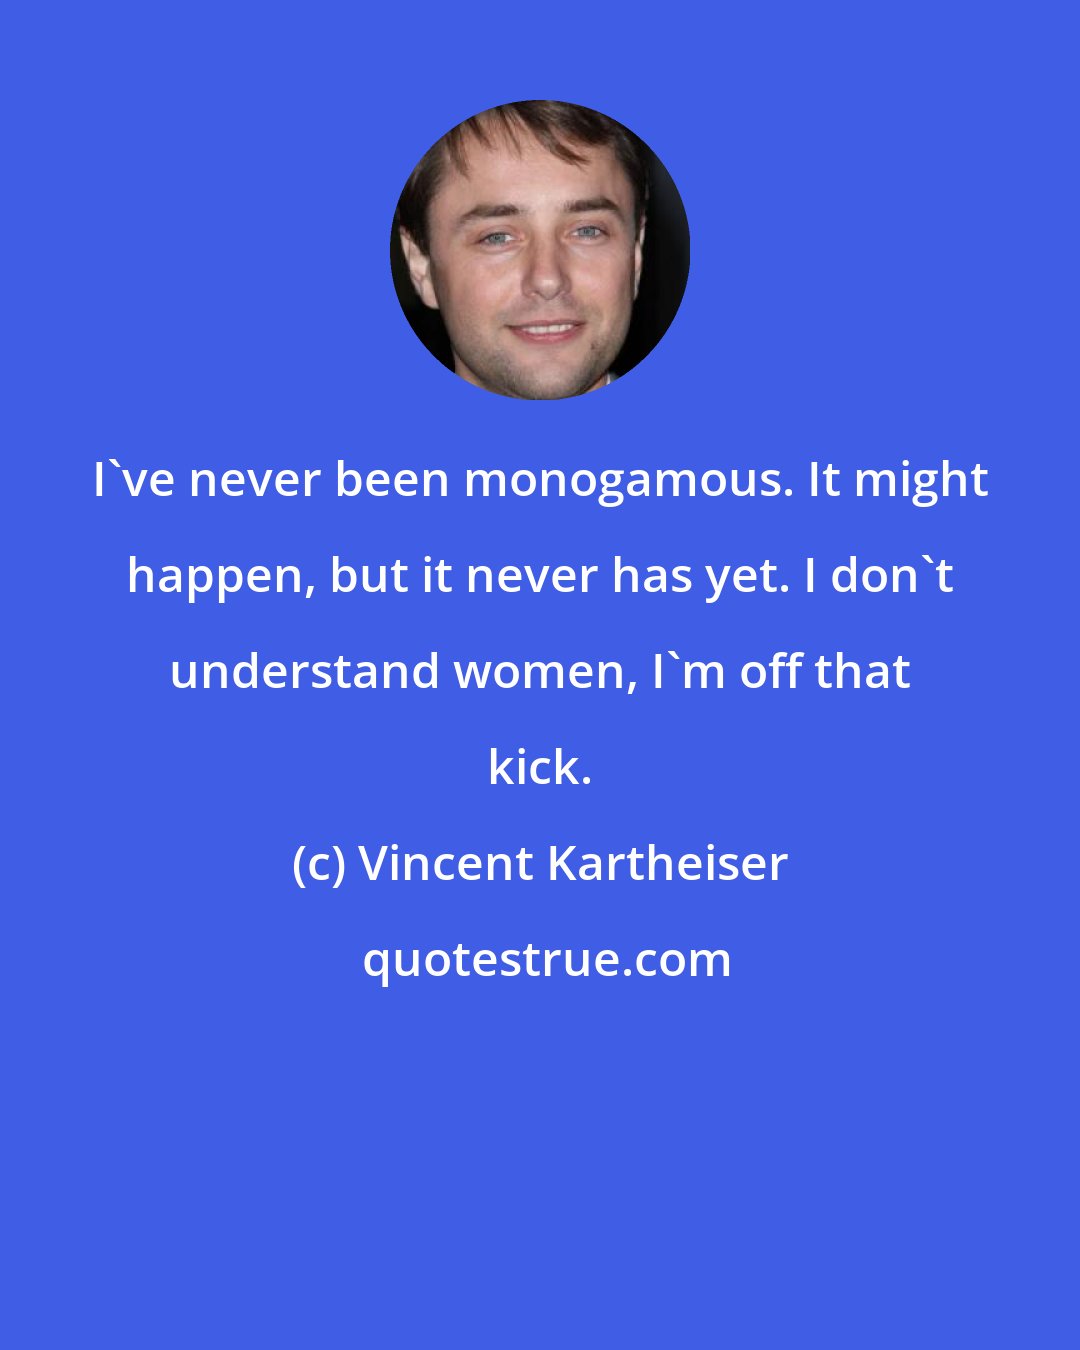 Vincent Kartheiser: I've never been monogamous. It might happen, but it never has yet. I don't understand women, I'm off that kick.